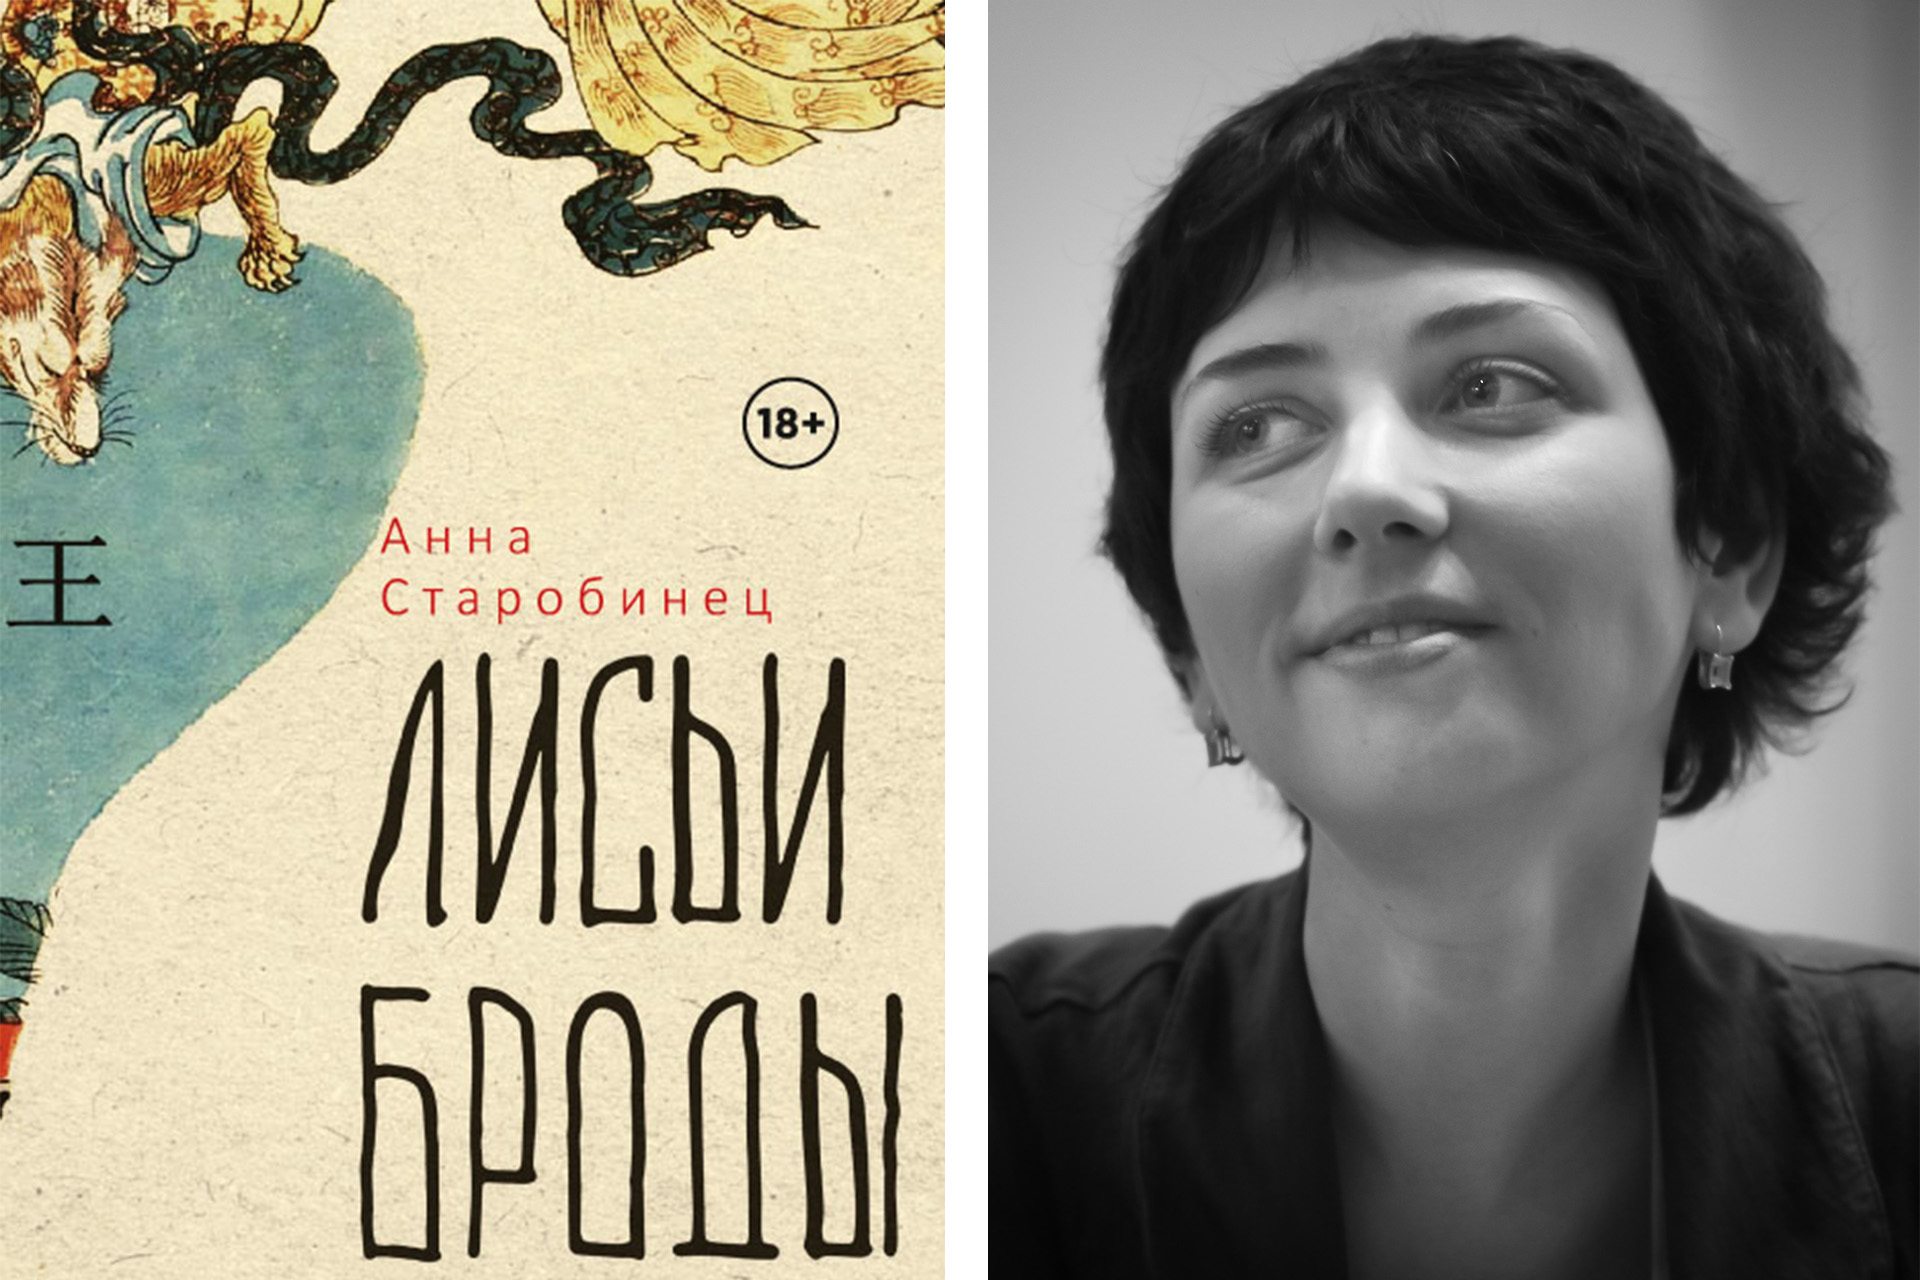 Слева: обложка книги; справа: Анна Старобинец